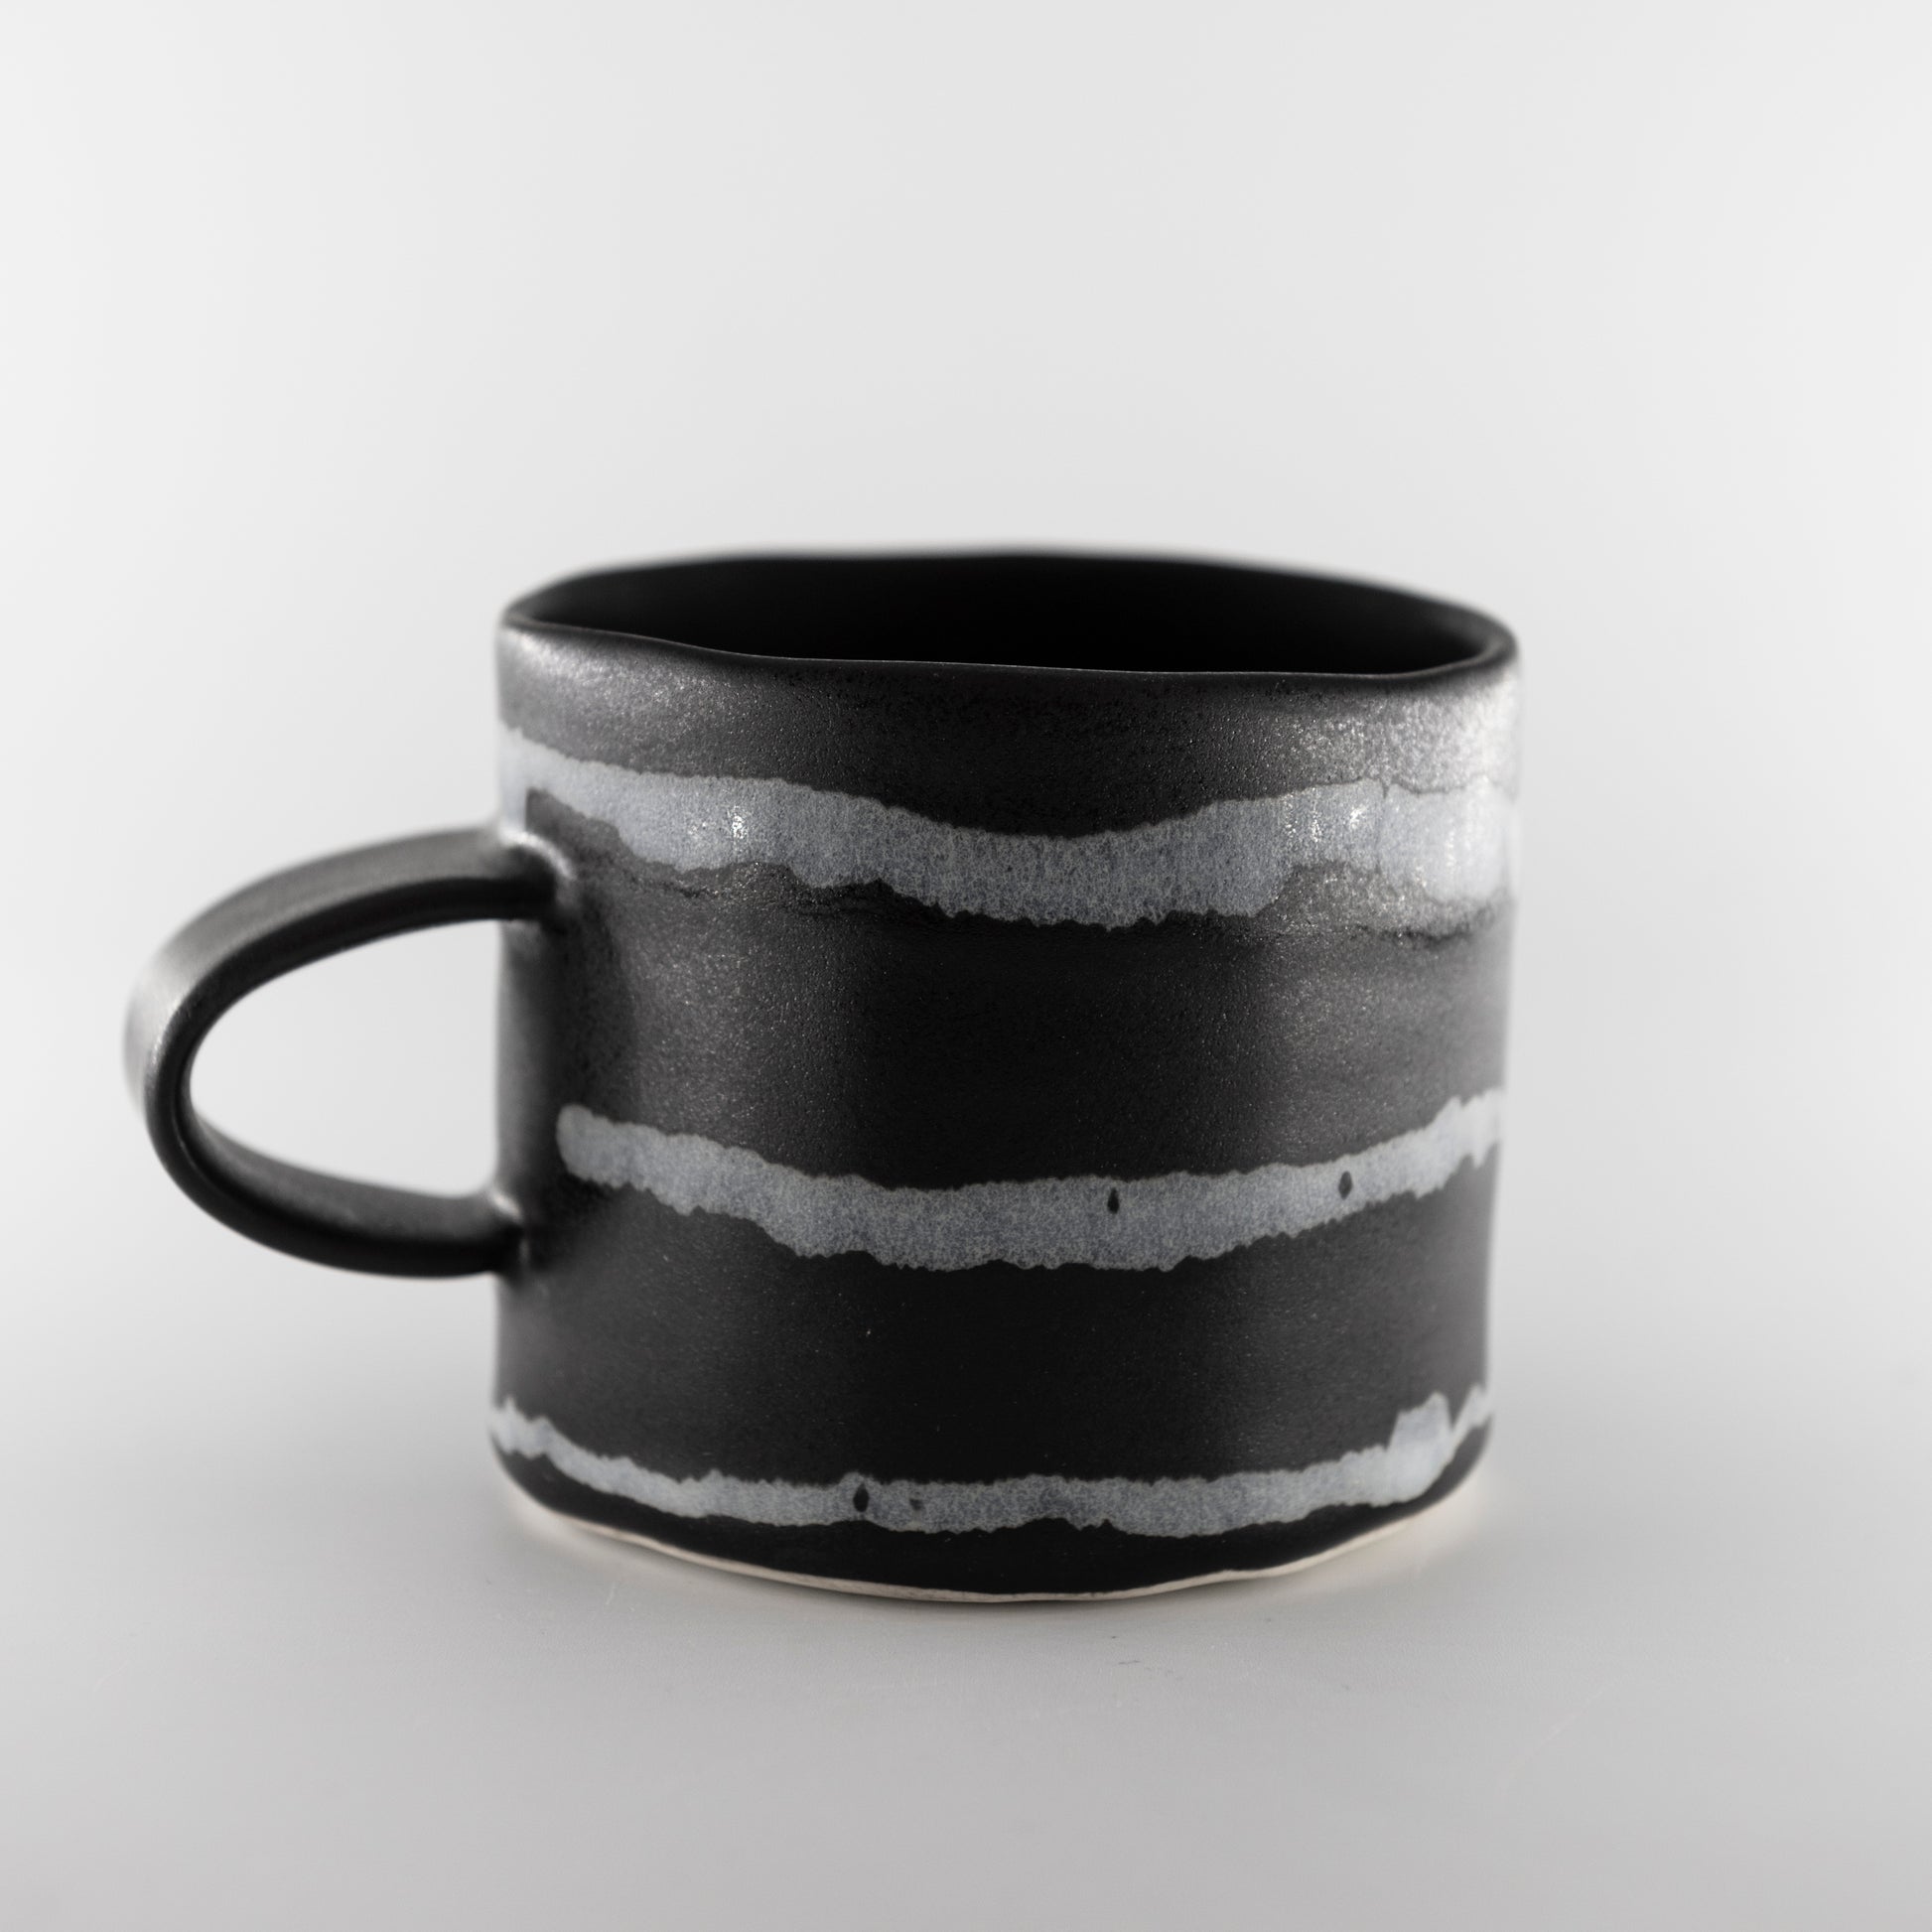 Black mug with grey irregular sized horizontal stripes around it.